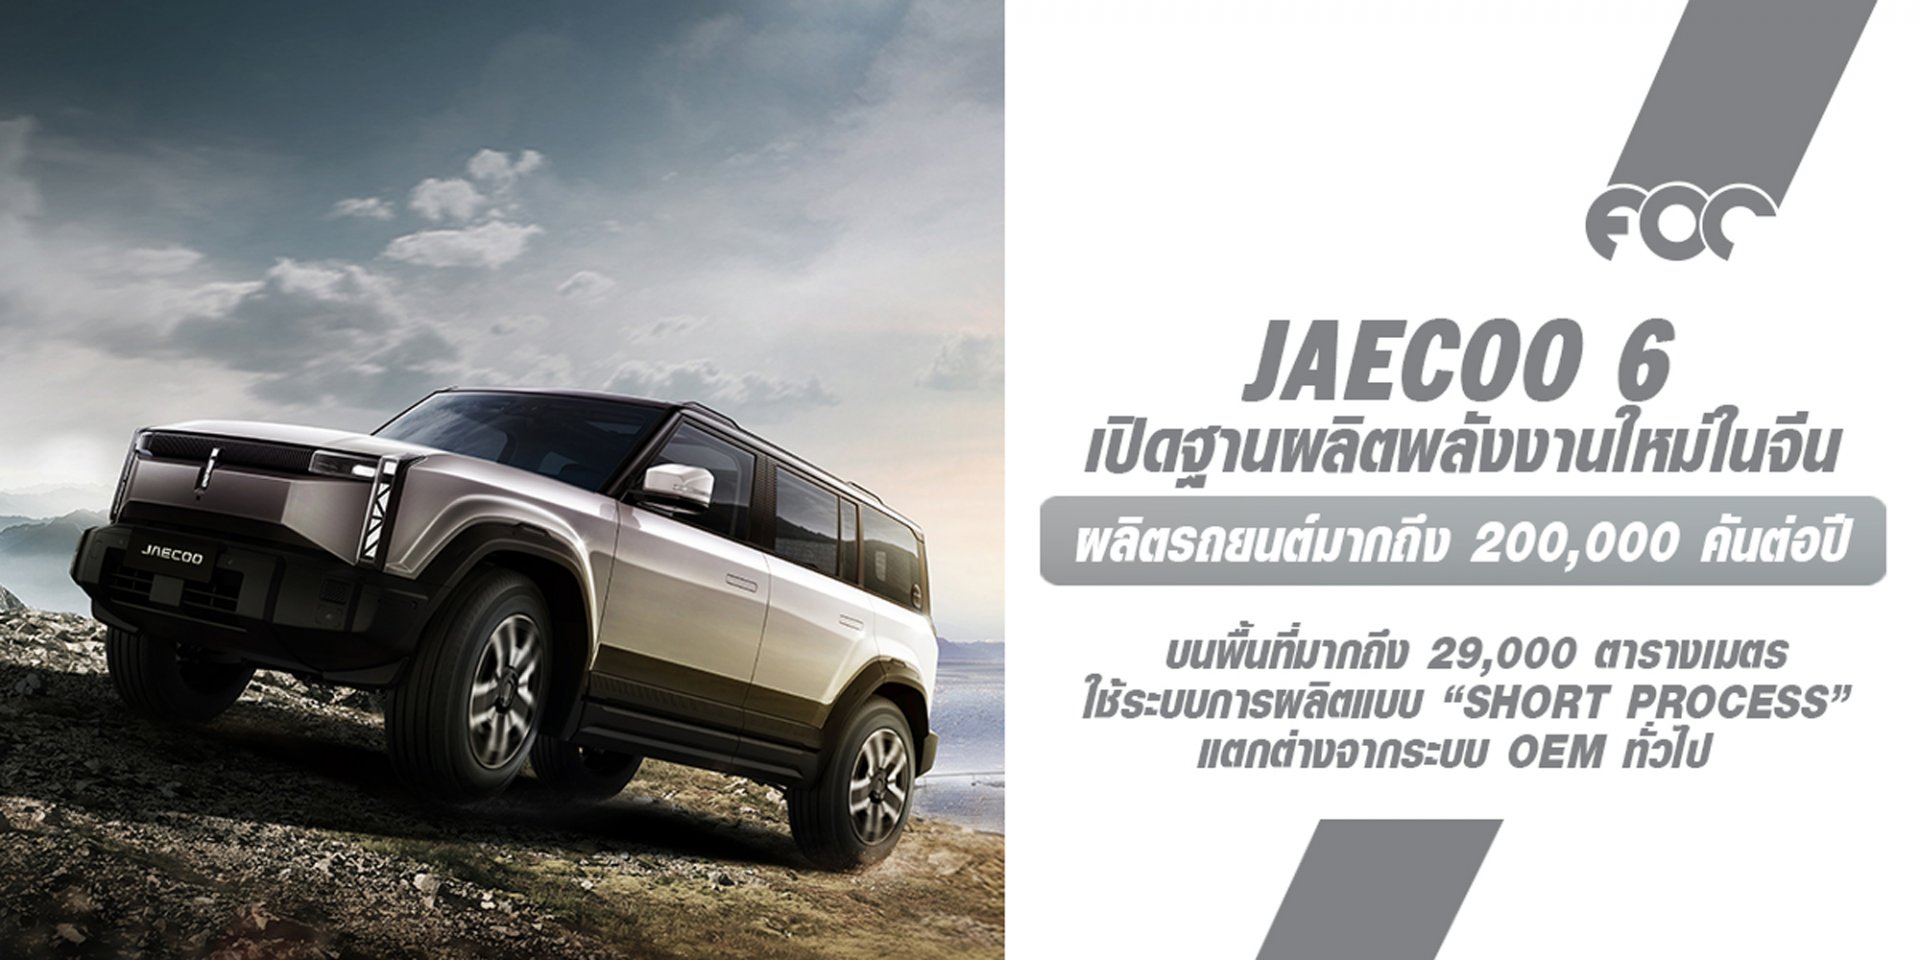 JAECOO 6 SUV ออฟโรดไฟฟ้า 100% เปิดไฮไลท์ฐานผลิตพลังงานใหม่ในประเทศจีน : ผลิตรถยนต์ได้มากถึง 200,000 คันต่อปี!